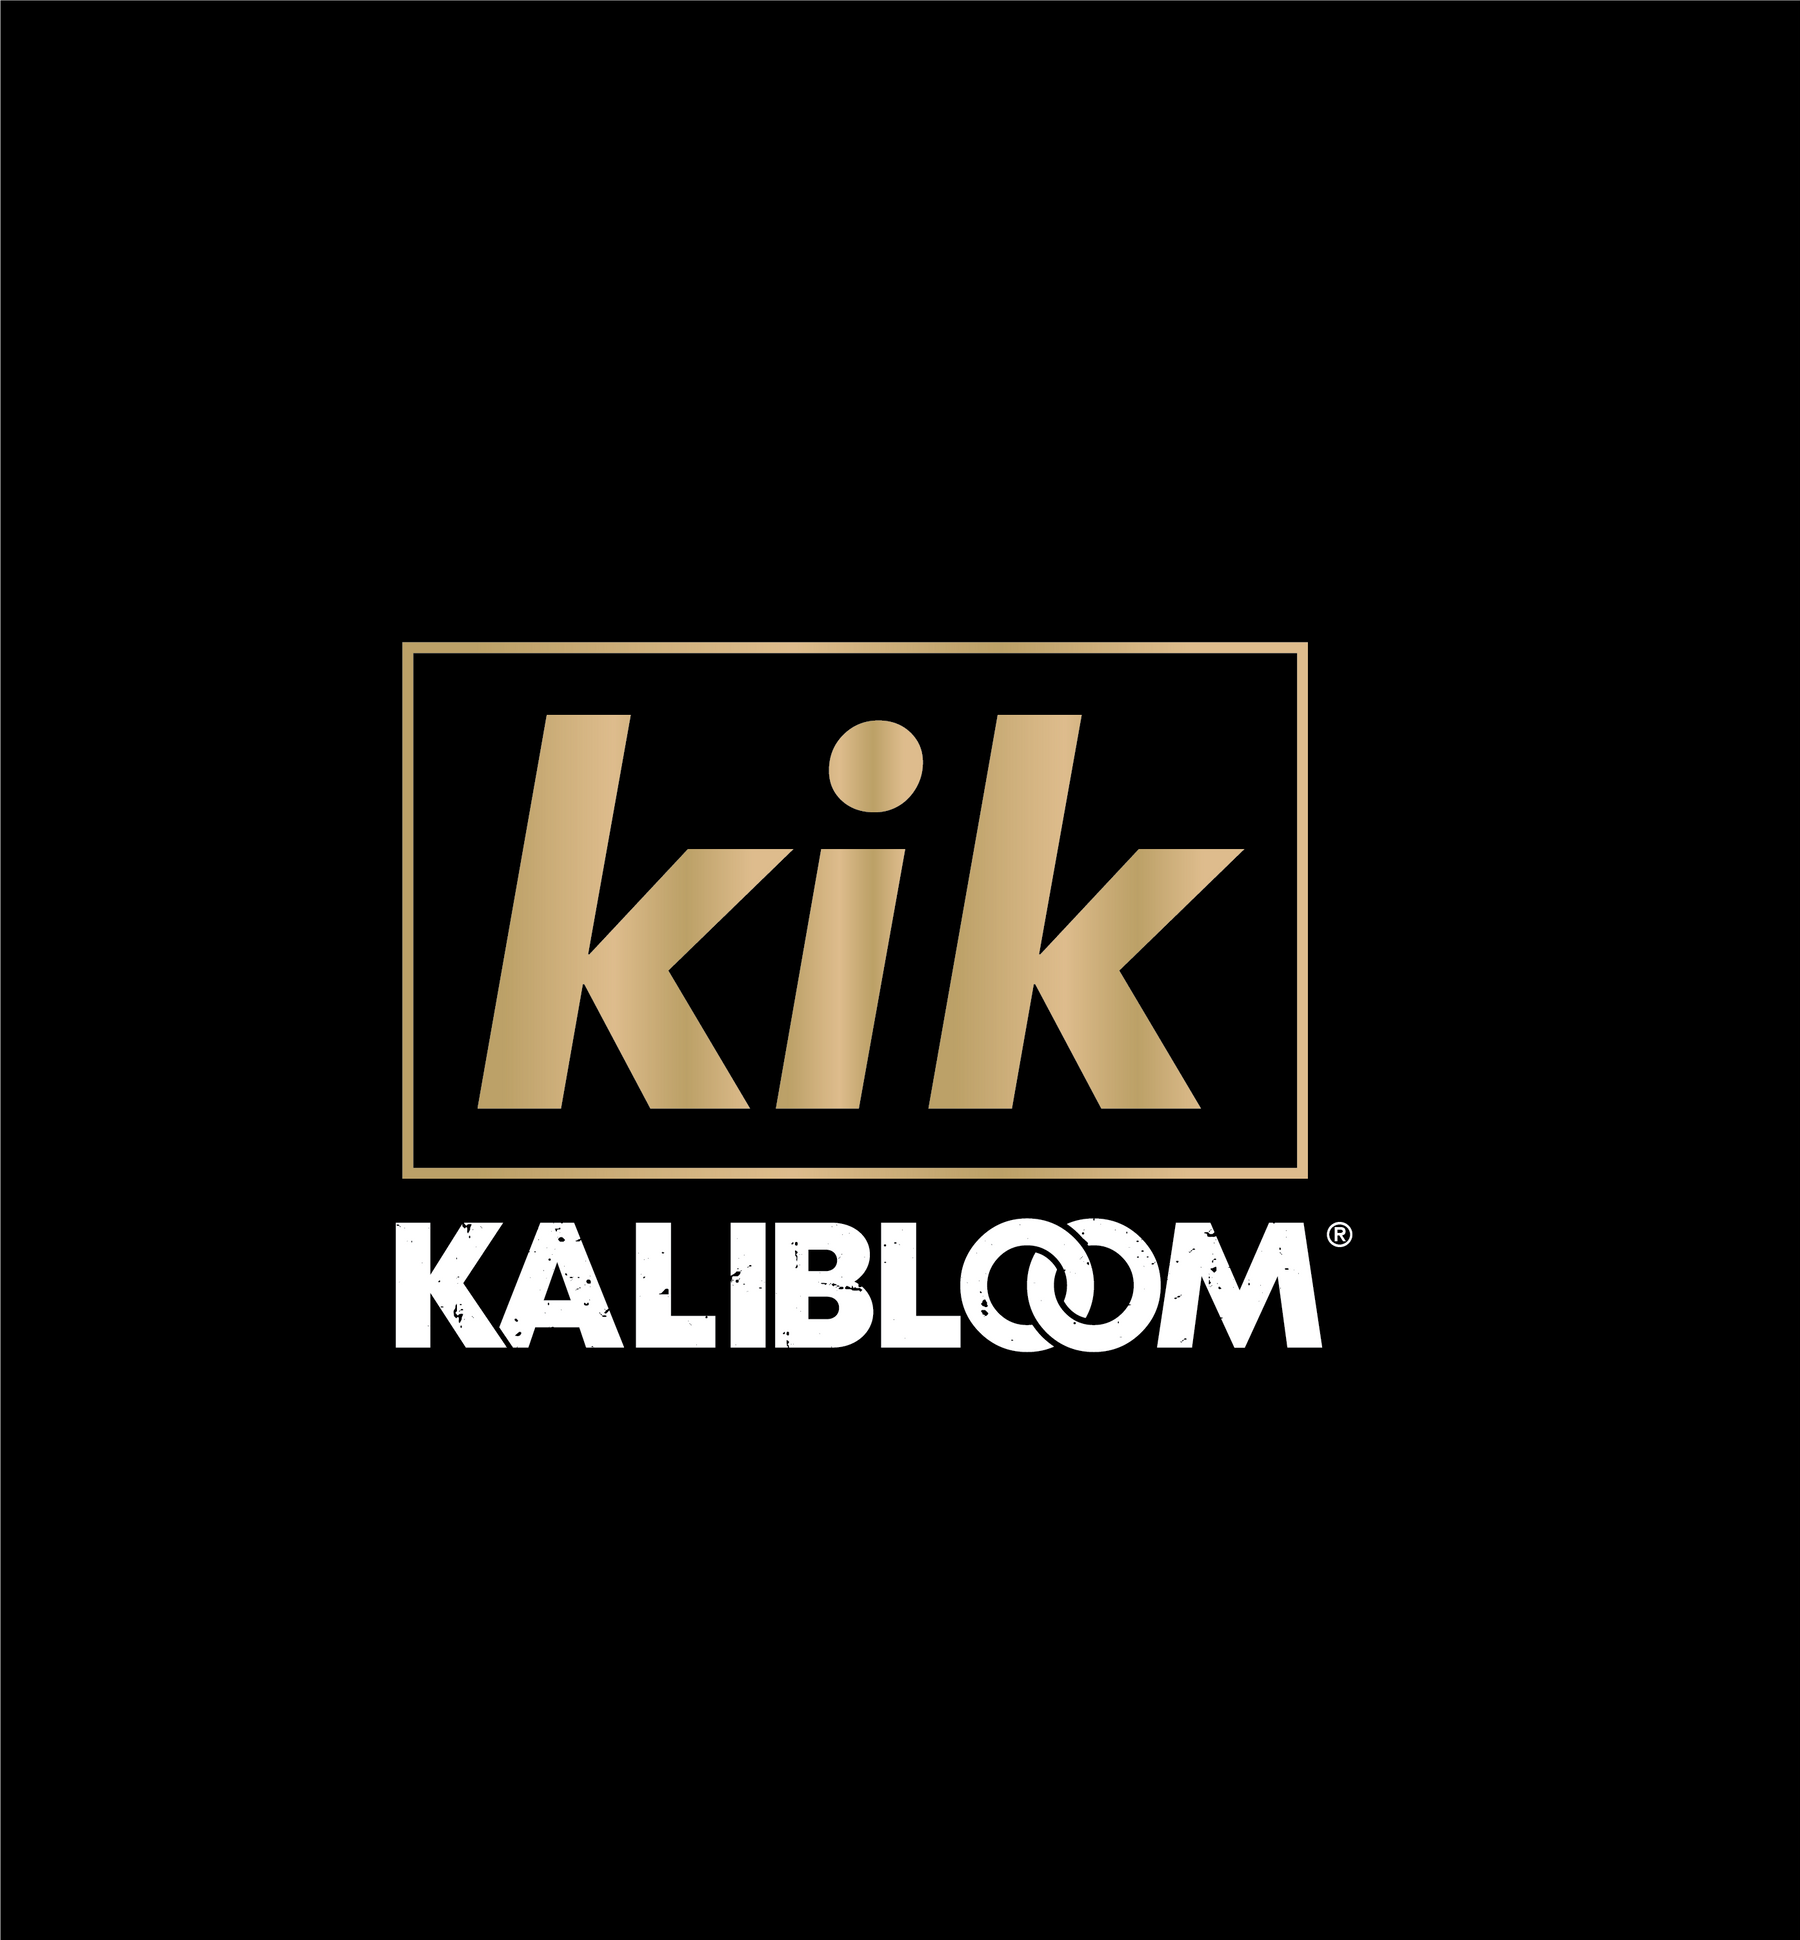 Kik Kalibloom Review: Premium Hemp Products & More